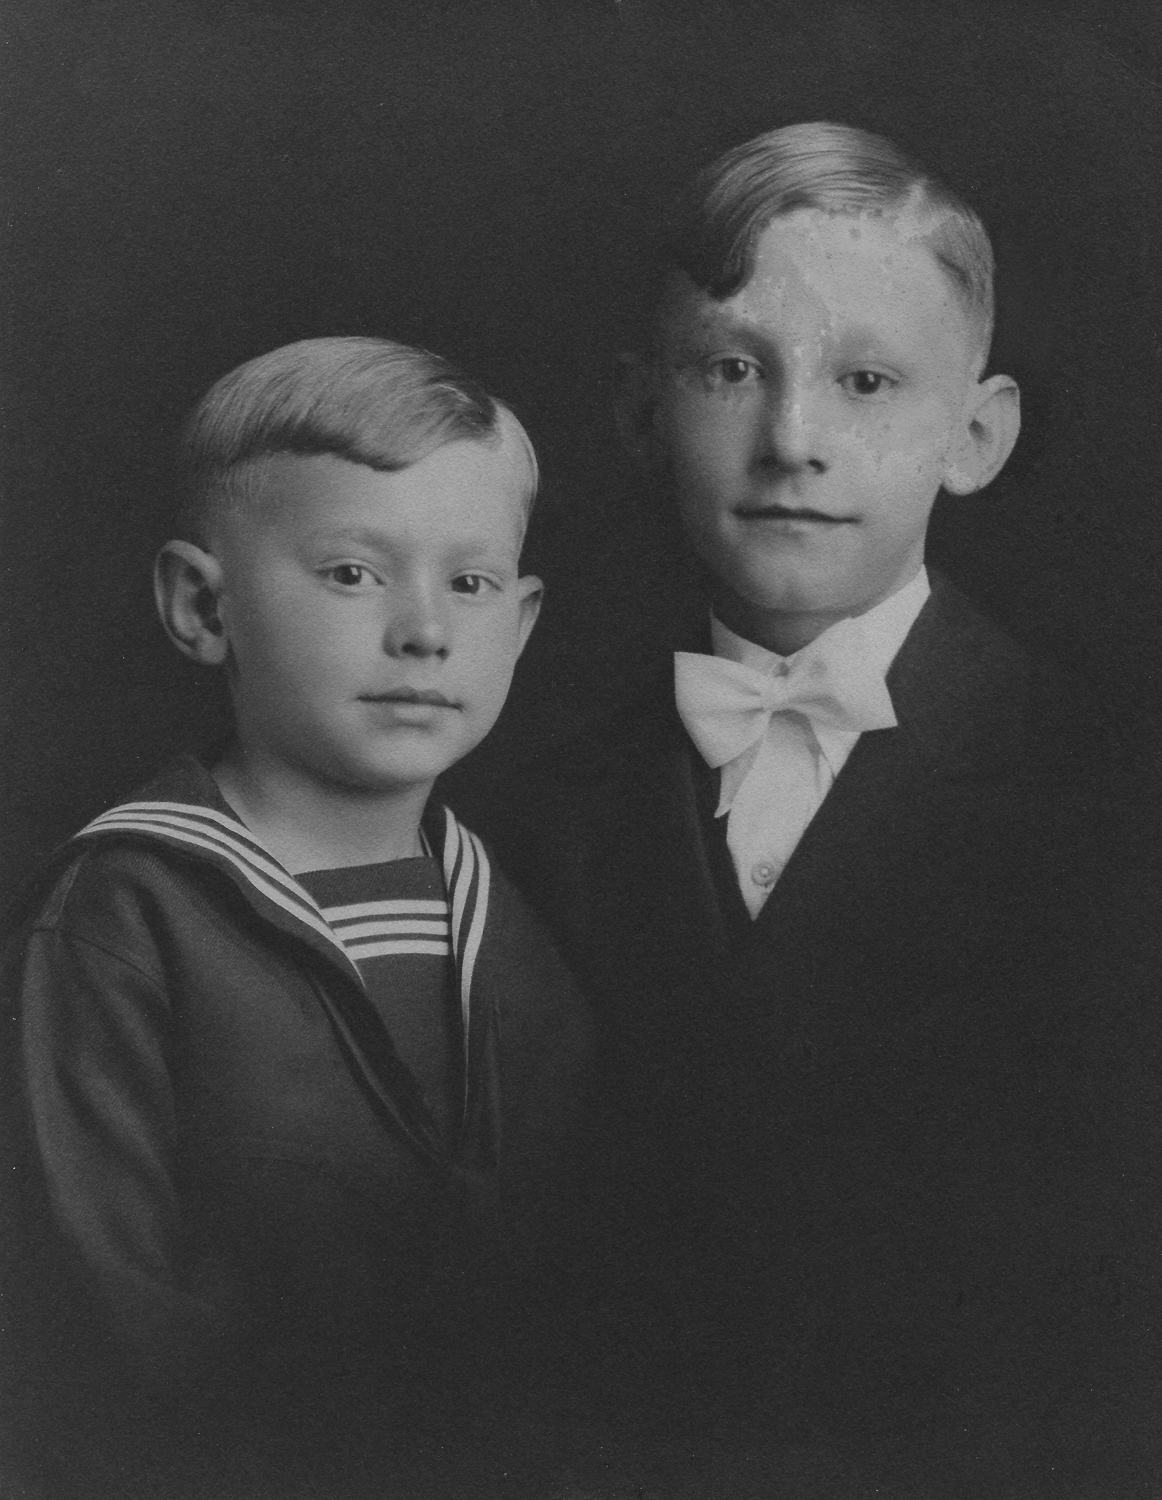 John and Herb, 1928